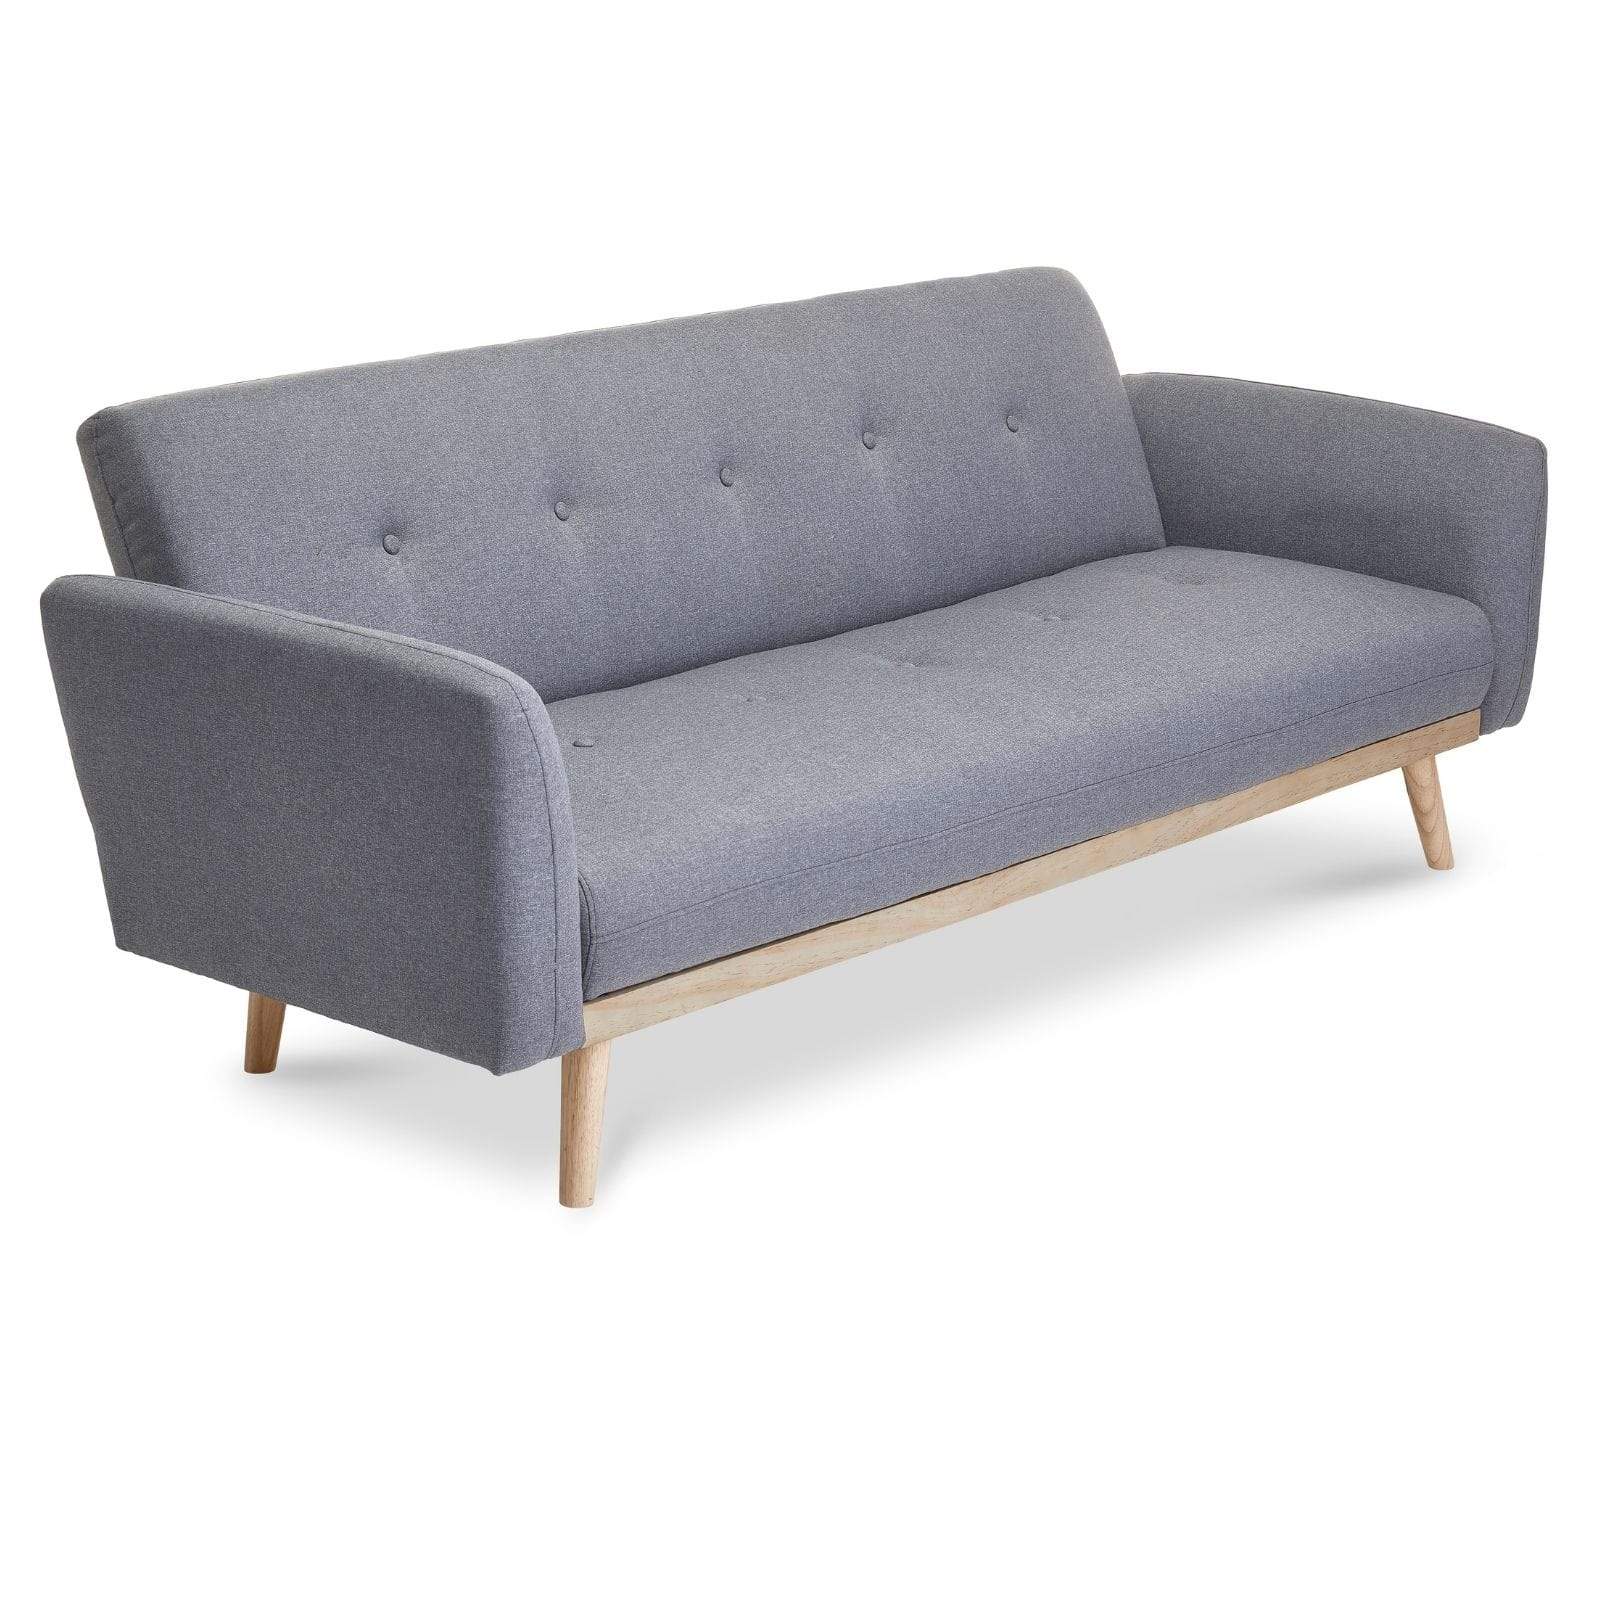 Nicholas 3-Seater Light Grey Foldable Sofa Bed - Newstart Furniture